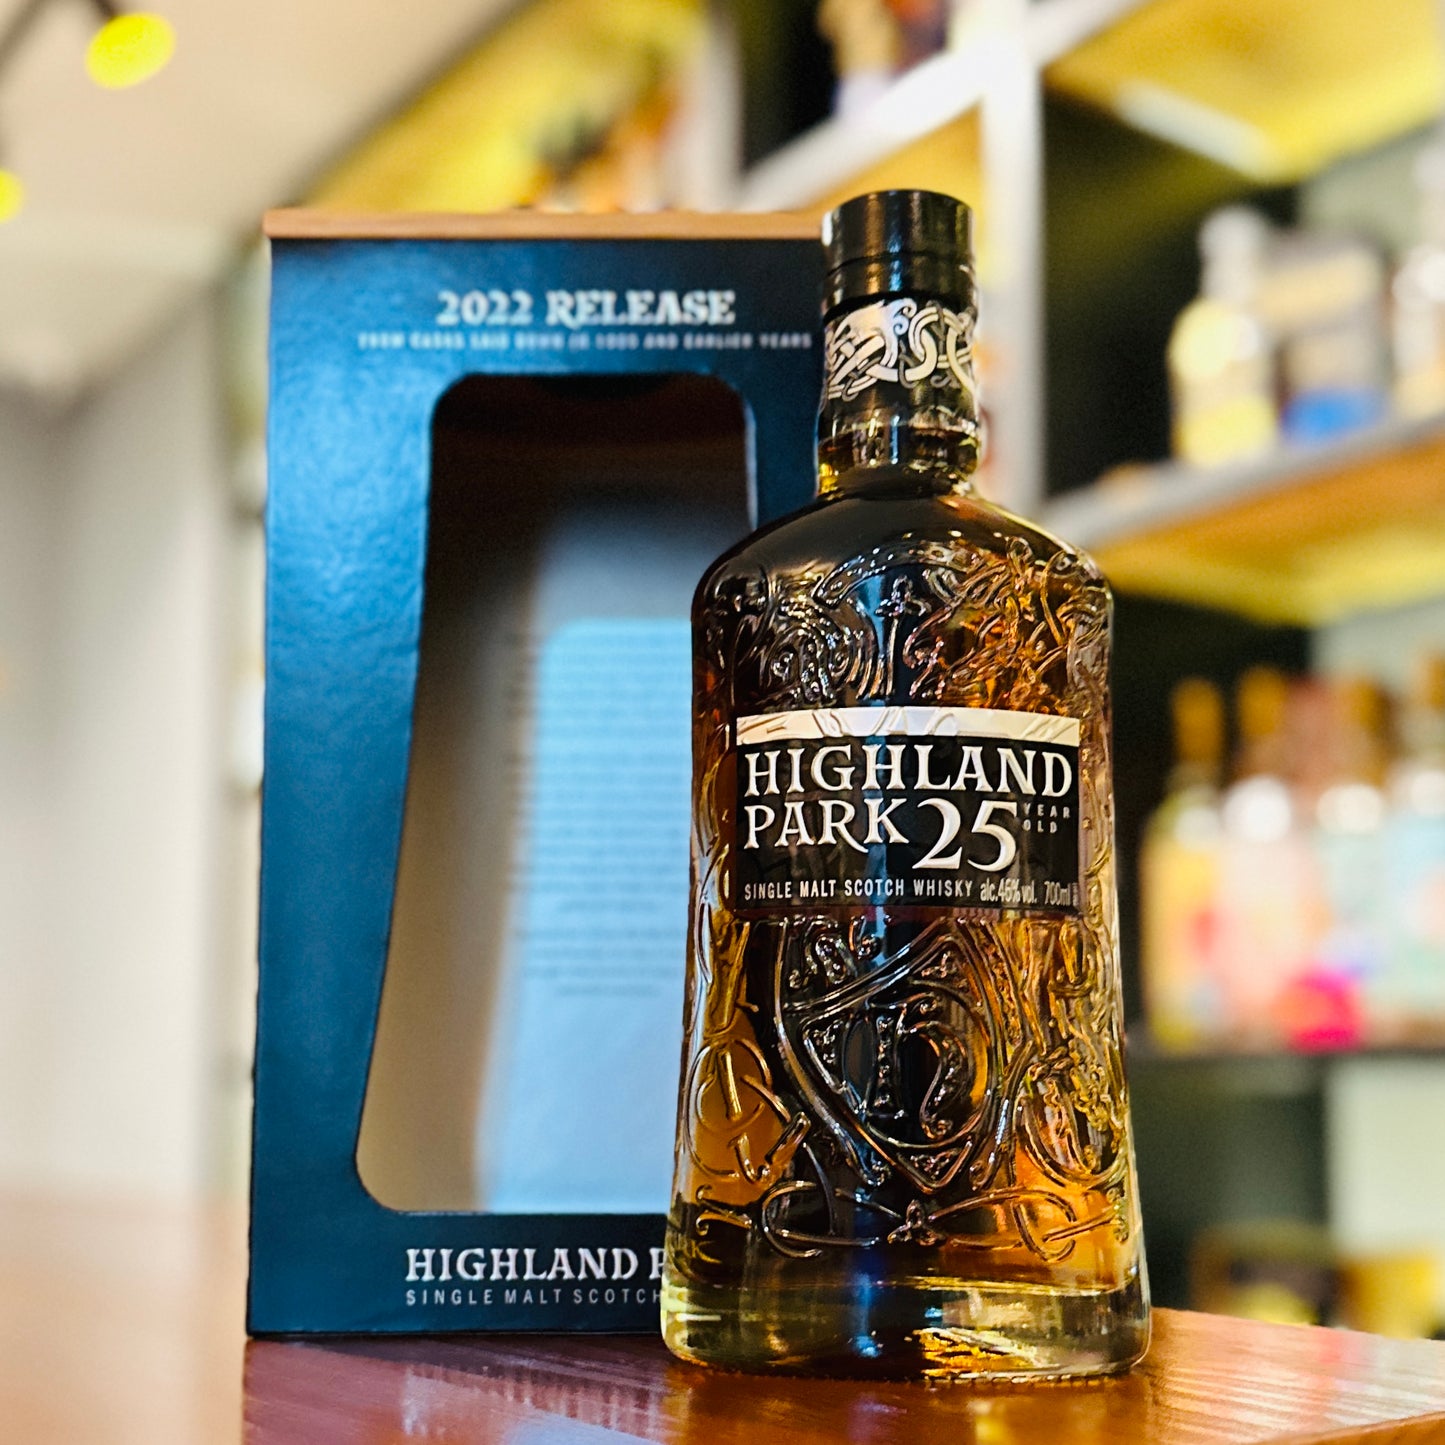 Highland Park 25 Year Old Single Malt Scotch Whisky (2022 Release)